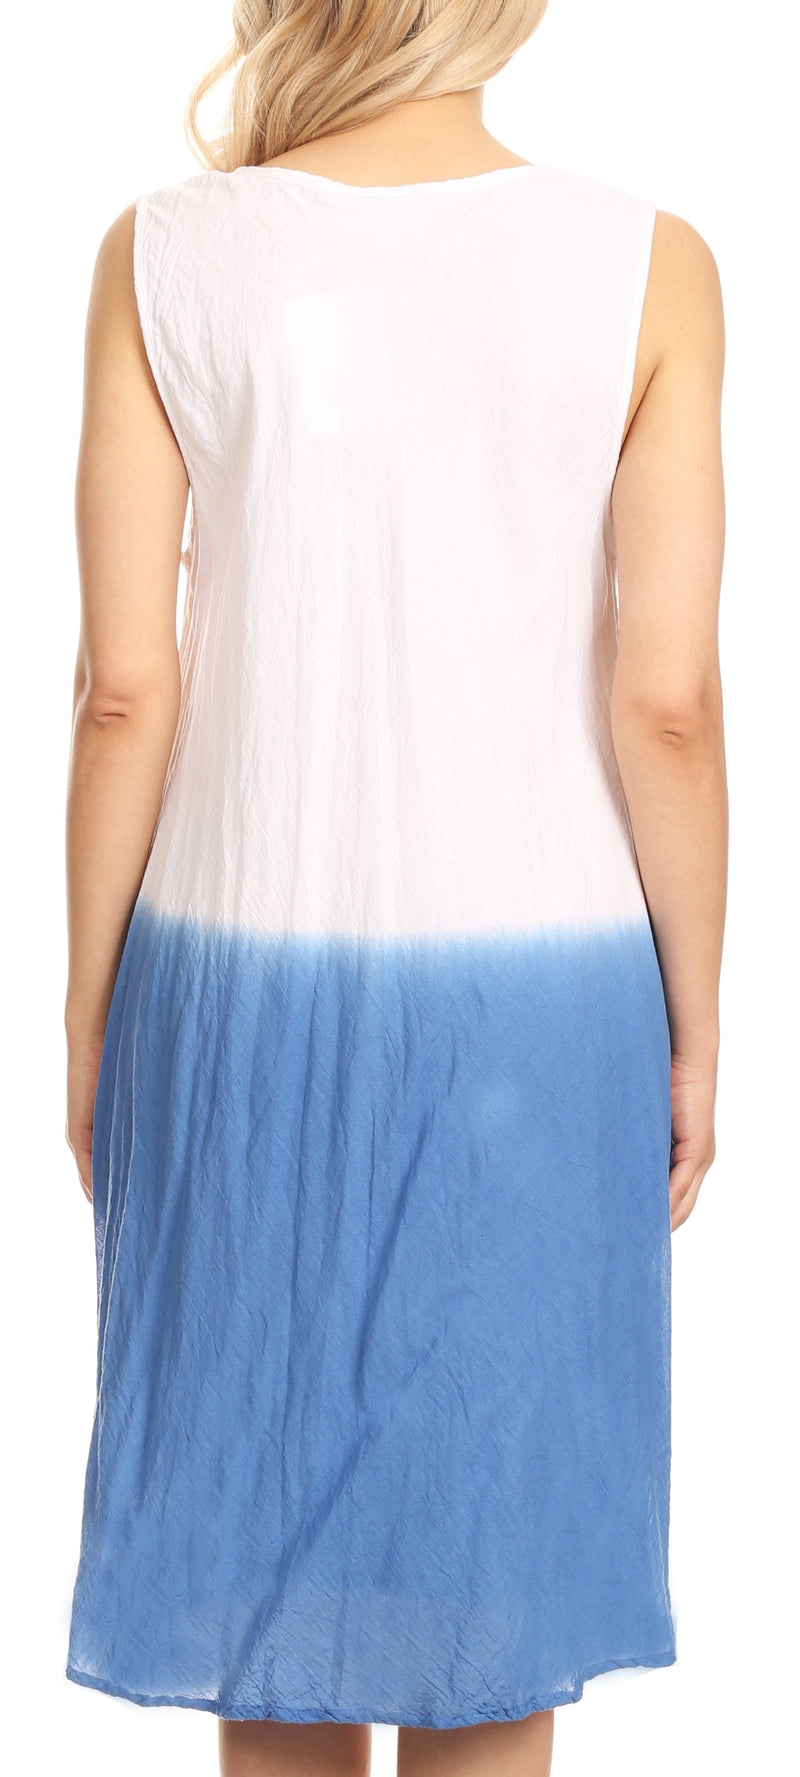 Sakkas Milana Light Summer Tie-dye Flowy Sleeveless Dress with String at Hem